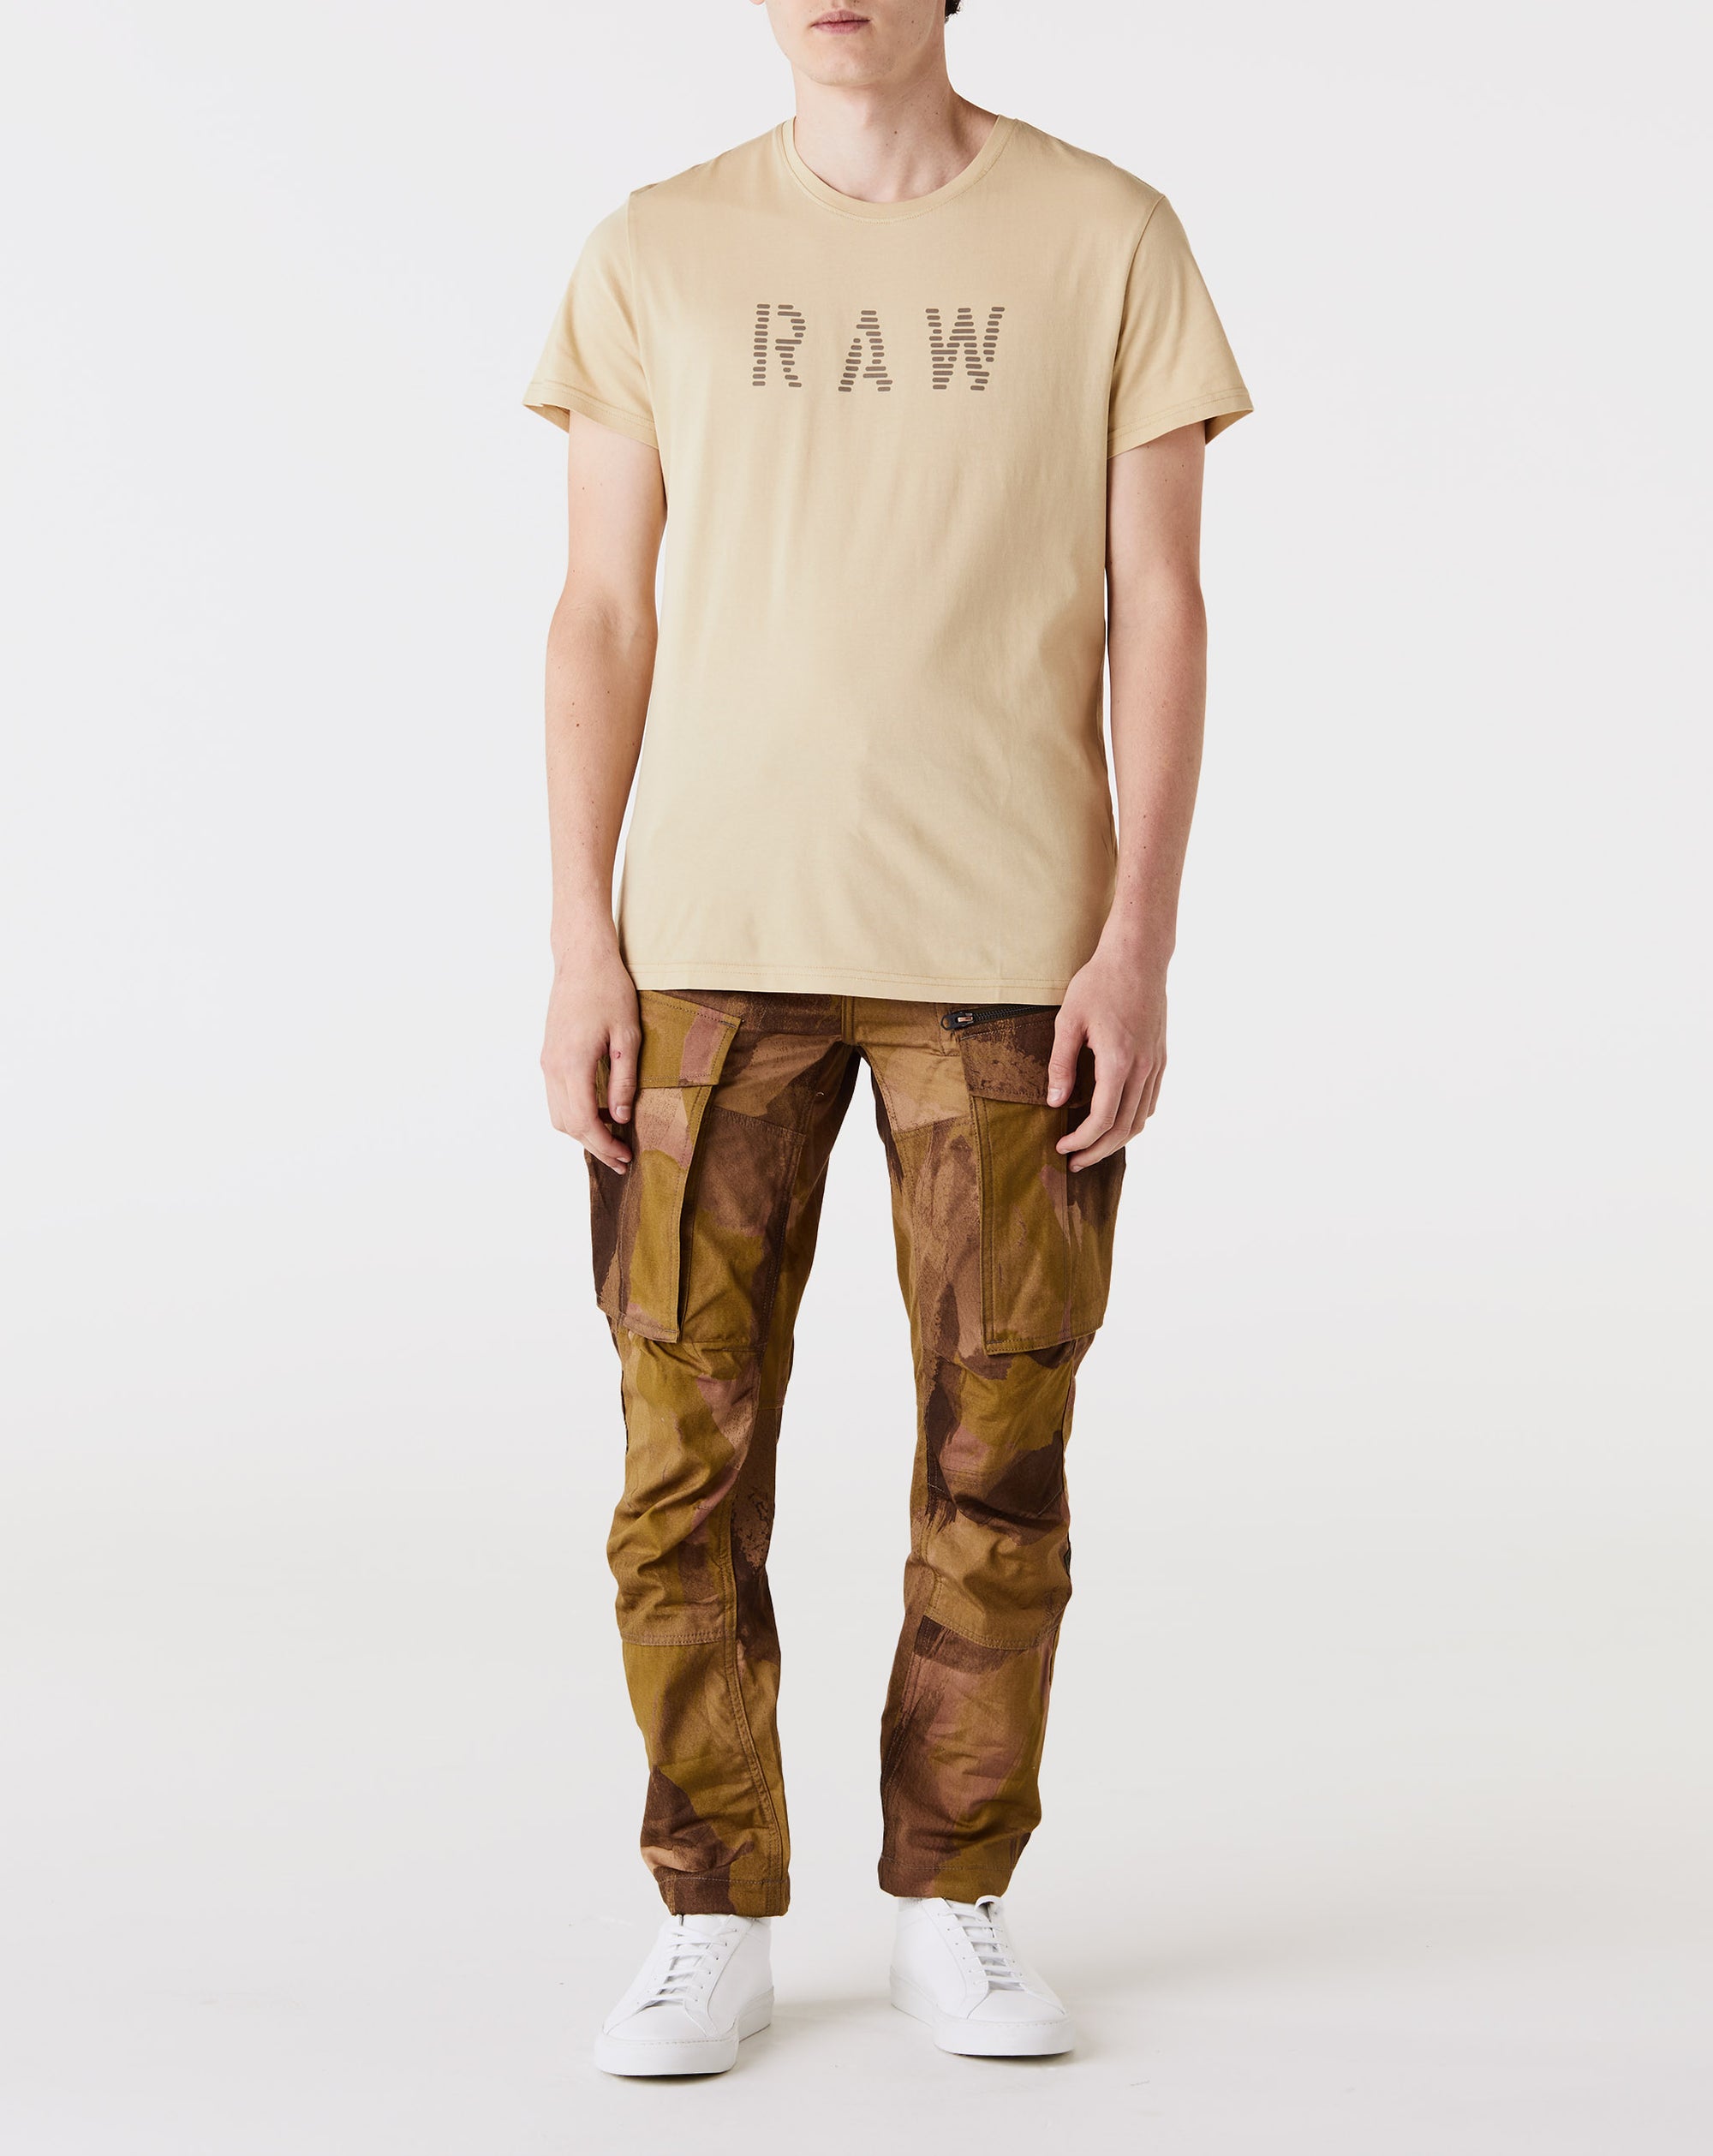 G-Star RAW RAW T-Shirt - Rule of Next Apparel